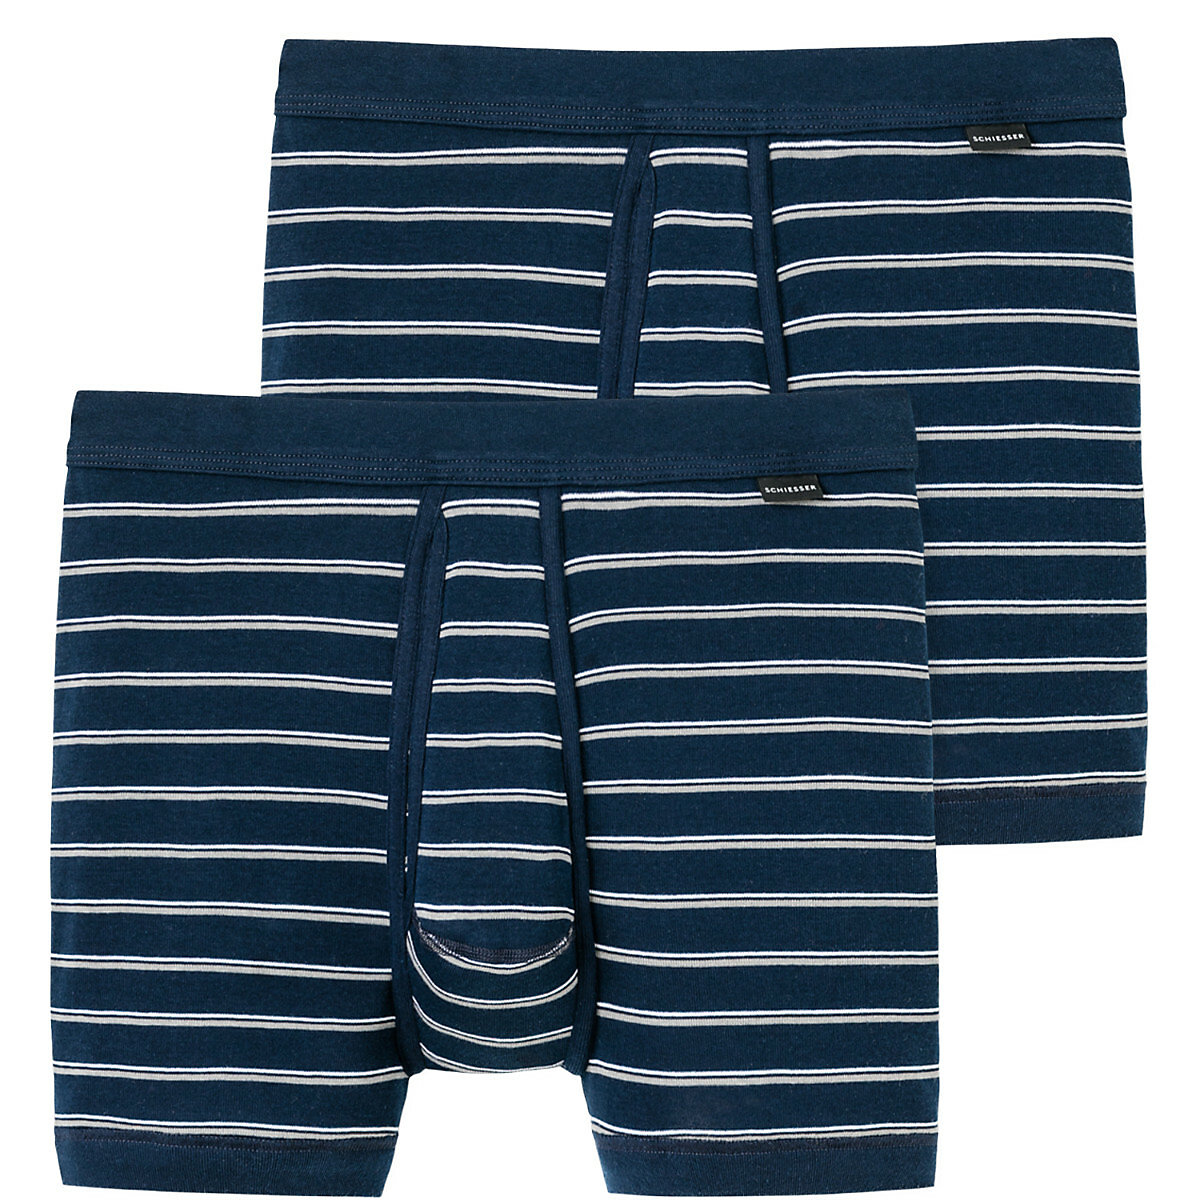 SCHIESSER Unterhose kurz mit Eingriff 2er Pack Original Classics Feinripp Panties dunkelblau